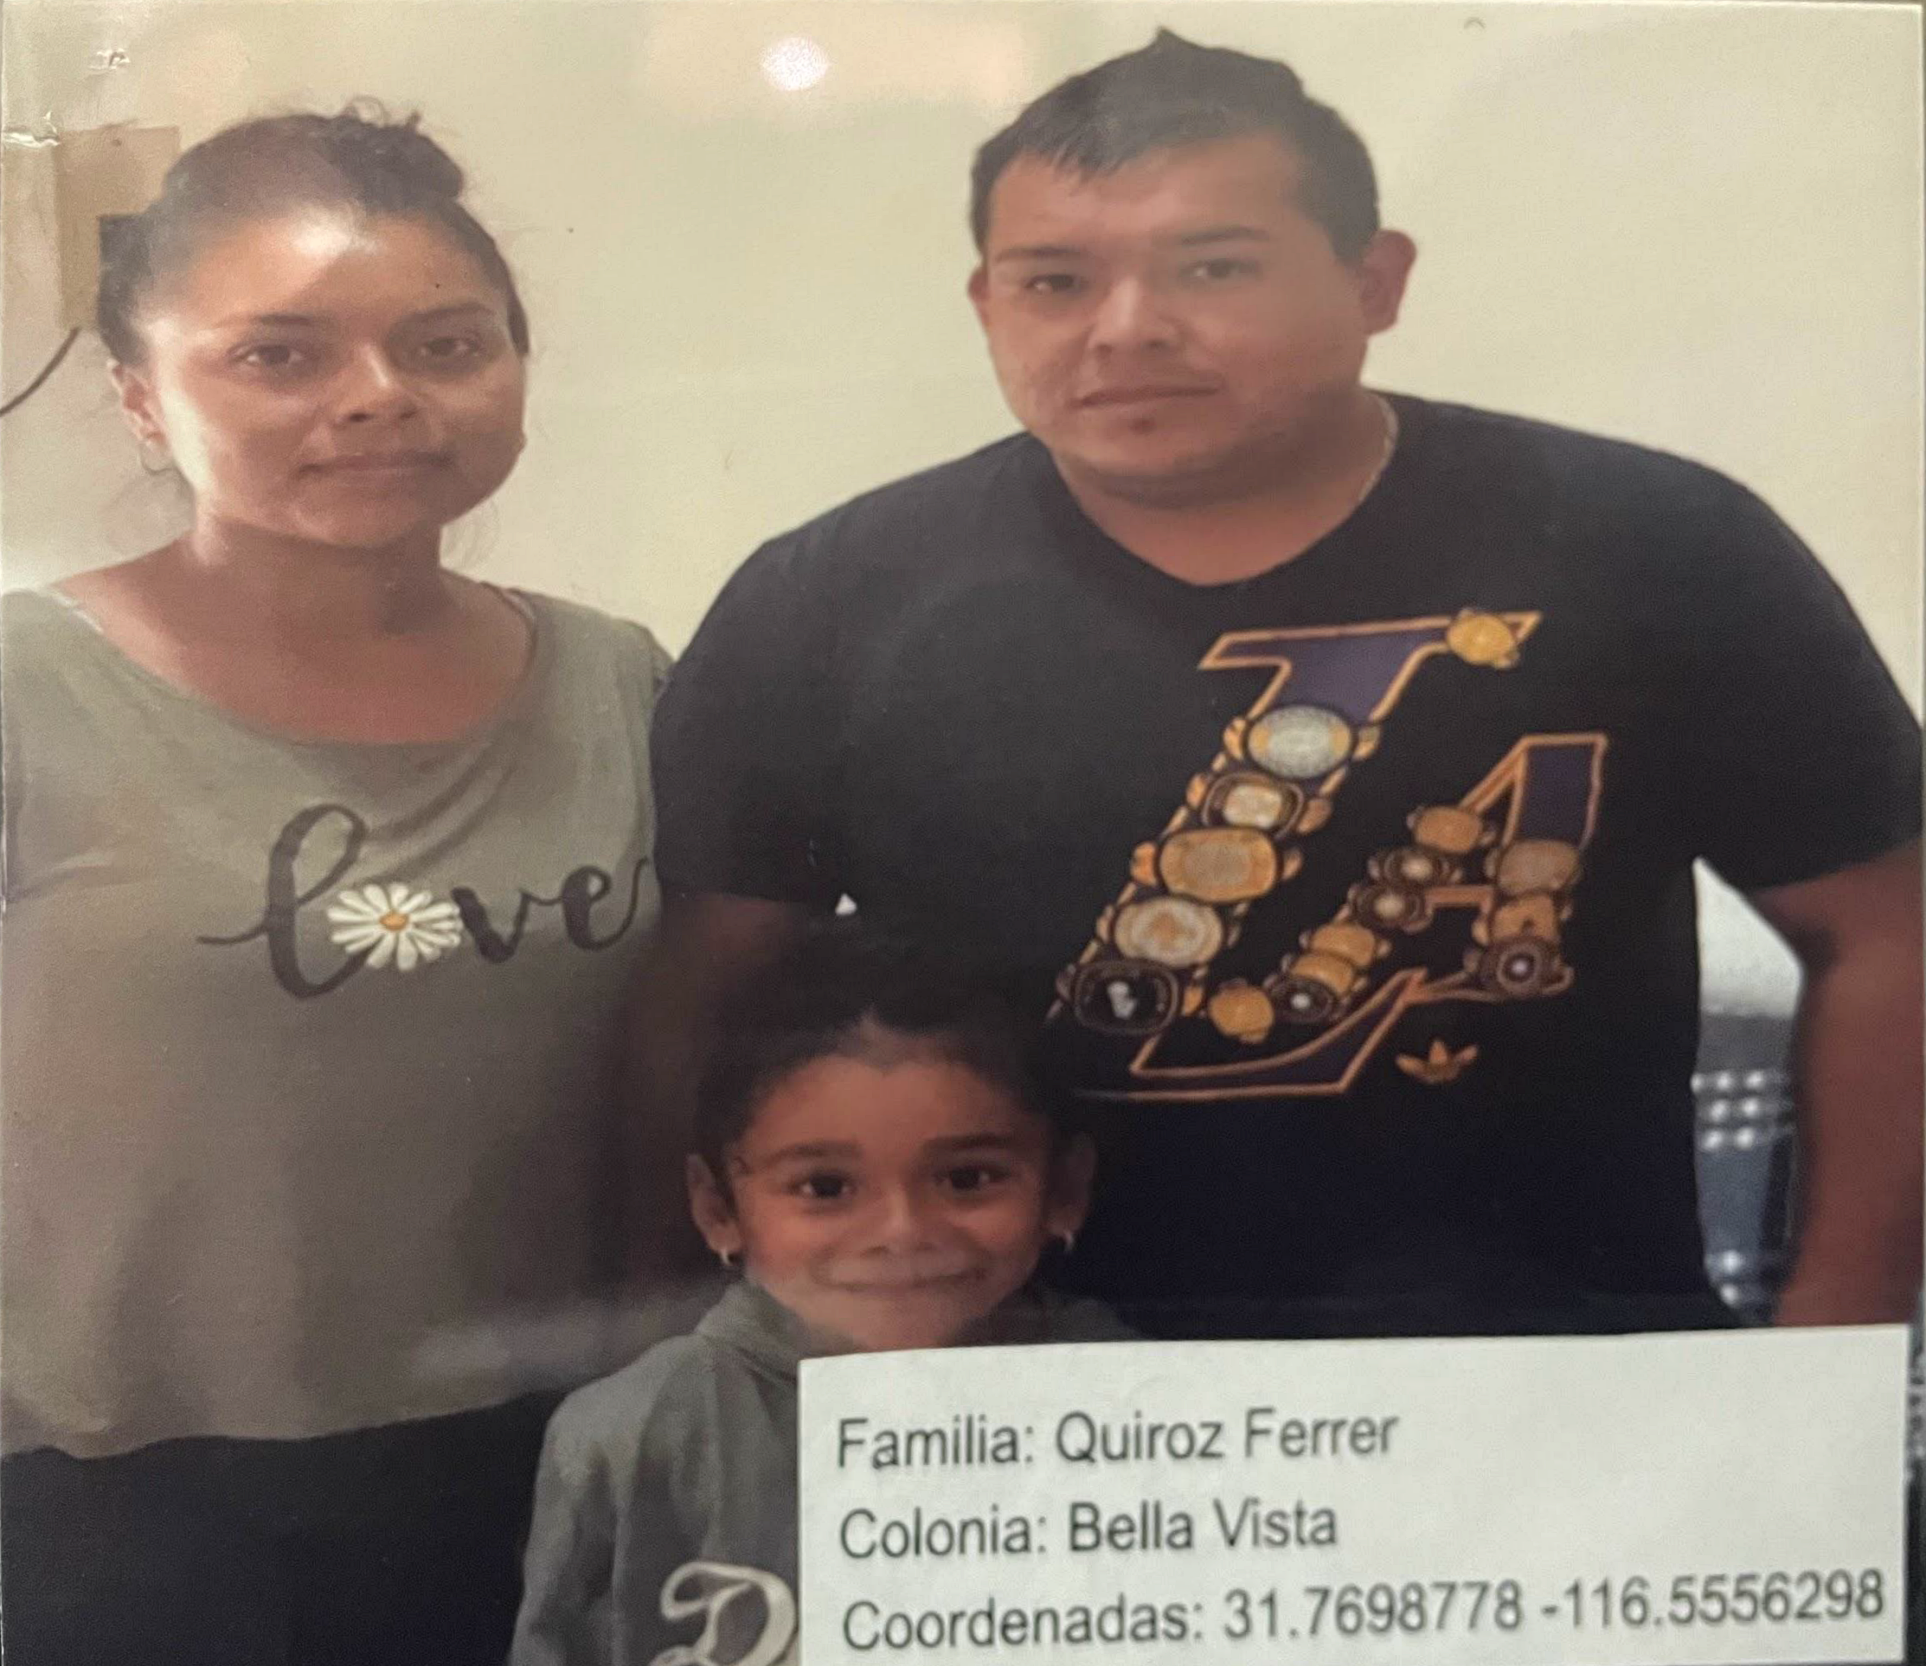 Quiroz Ferrer Family